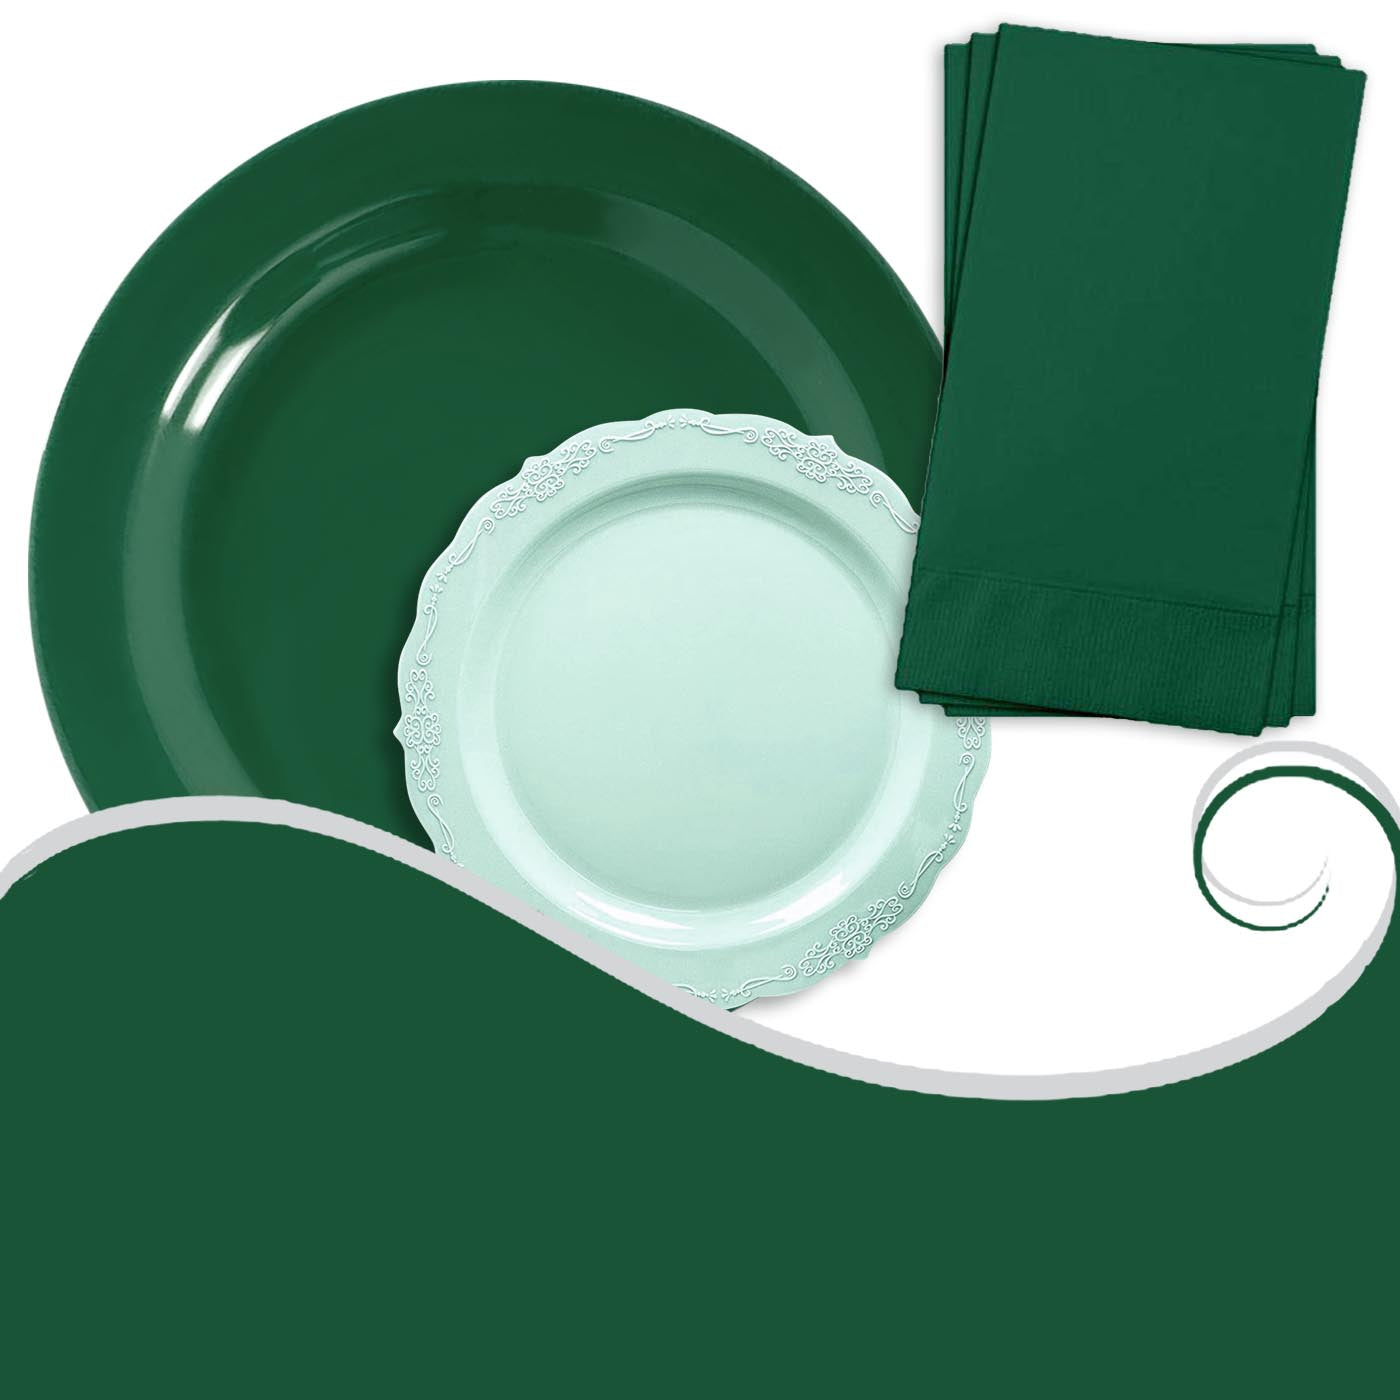 Green Party Dinnerware